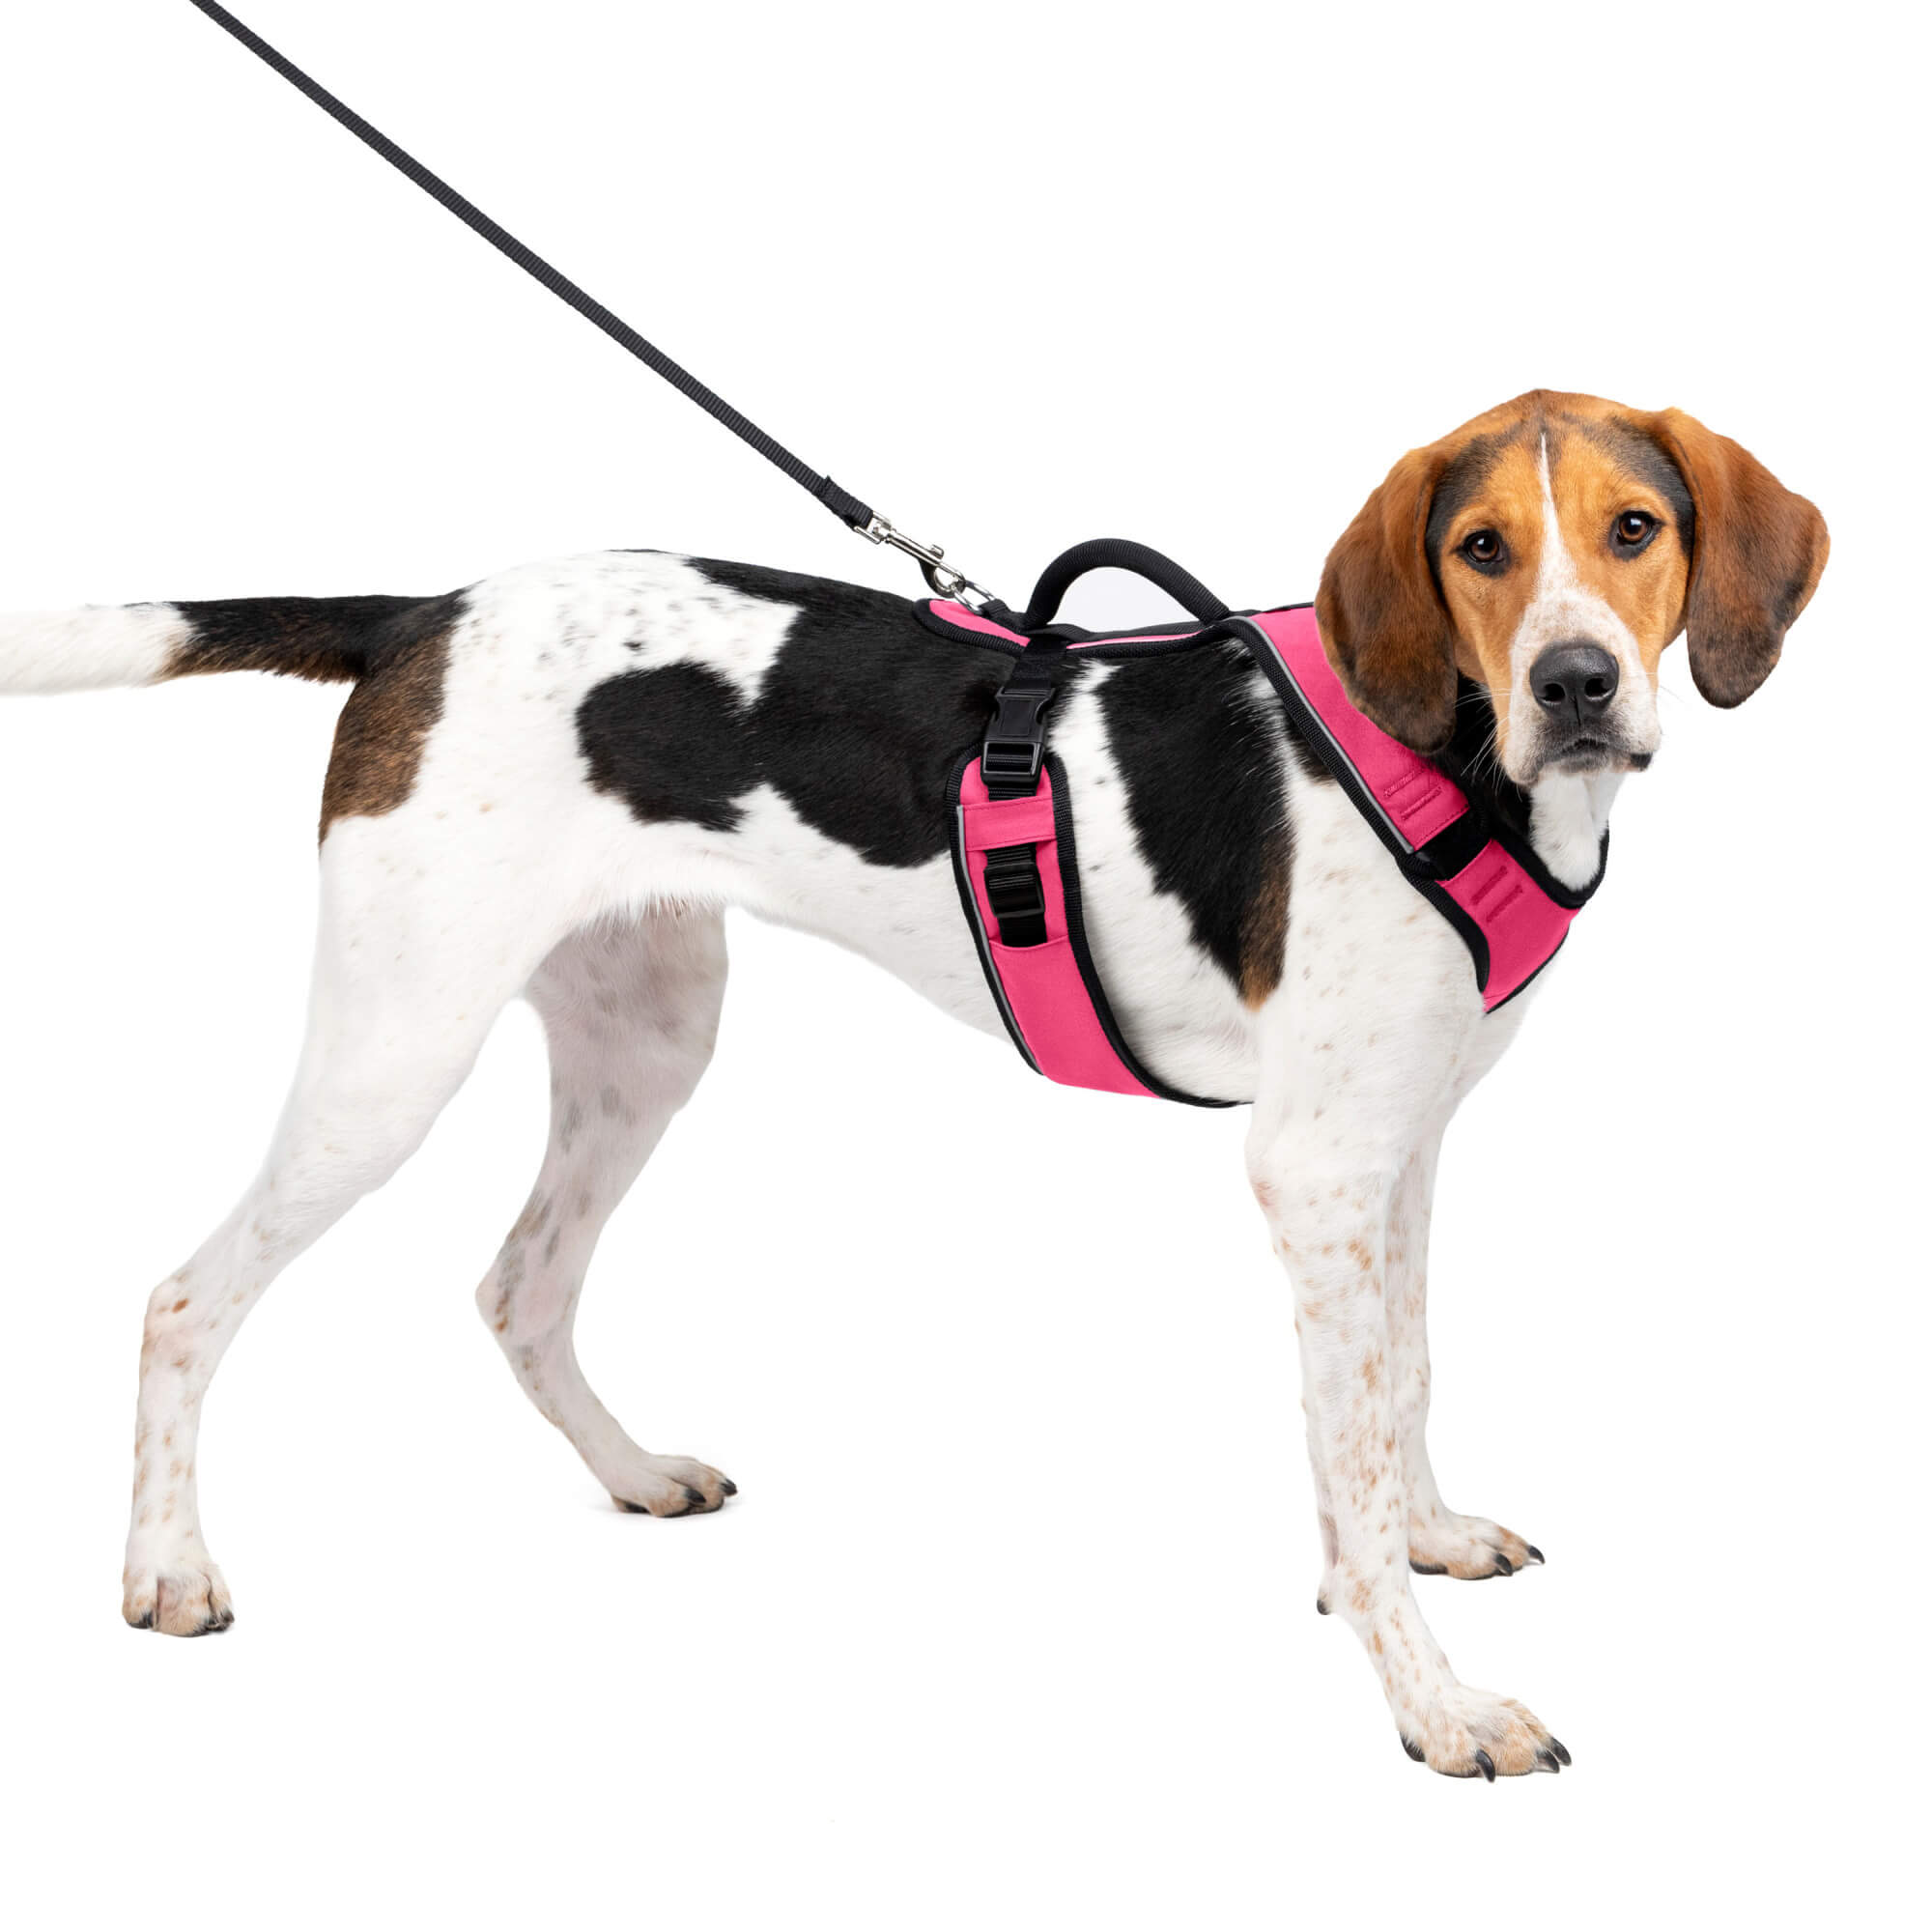 Dog wearing pink petsafe easysport harness in large